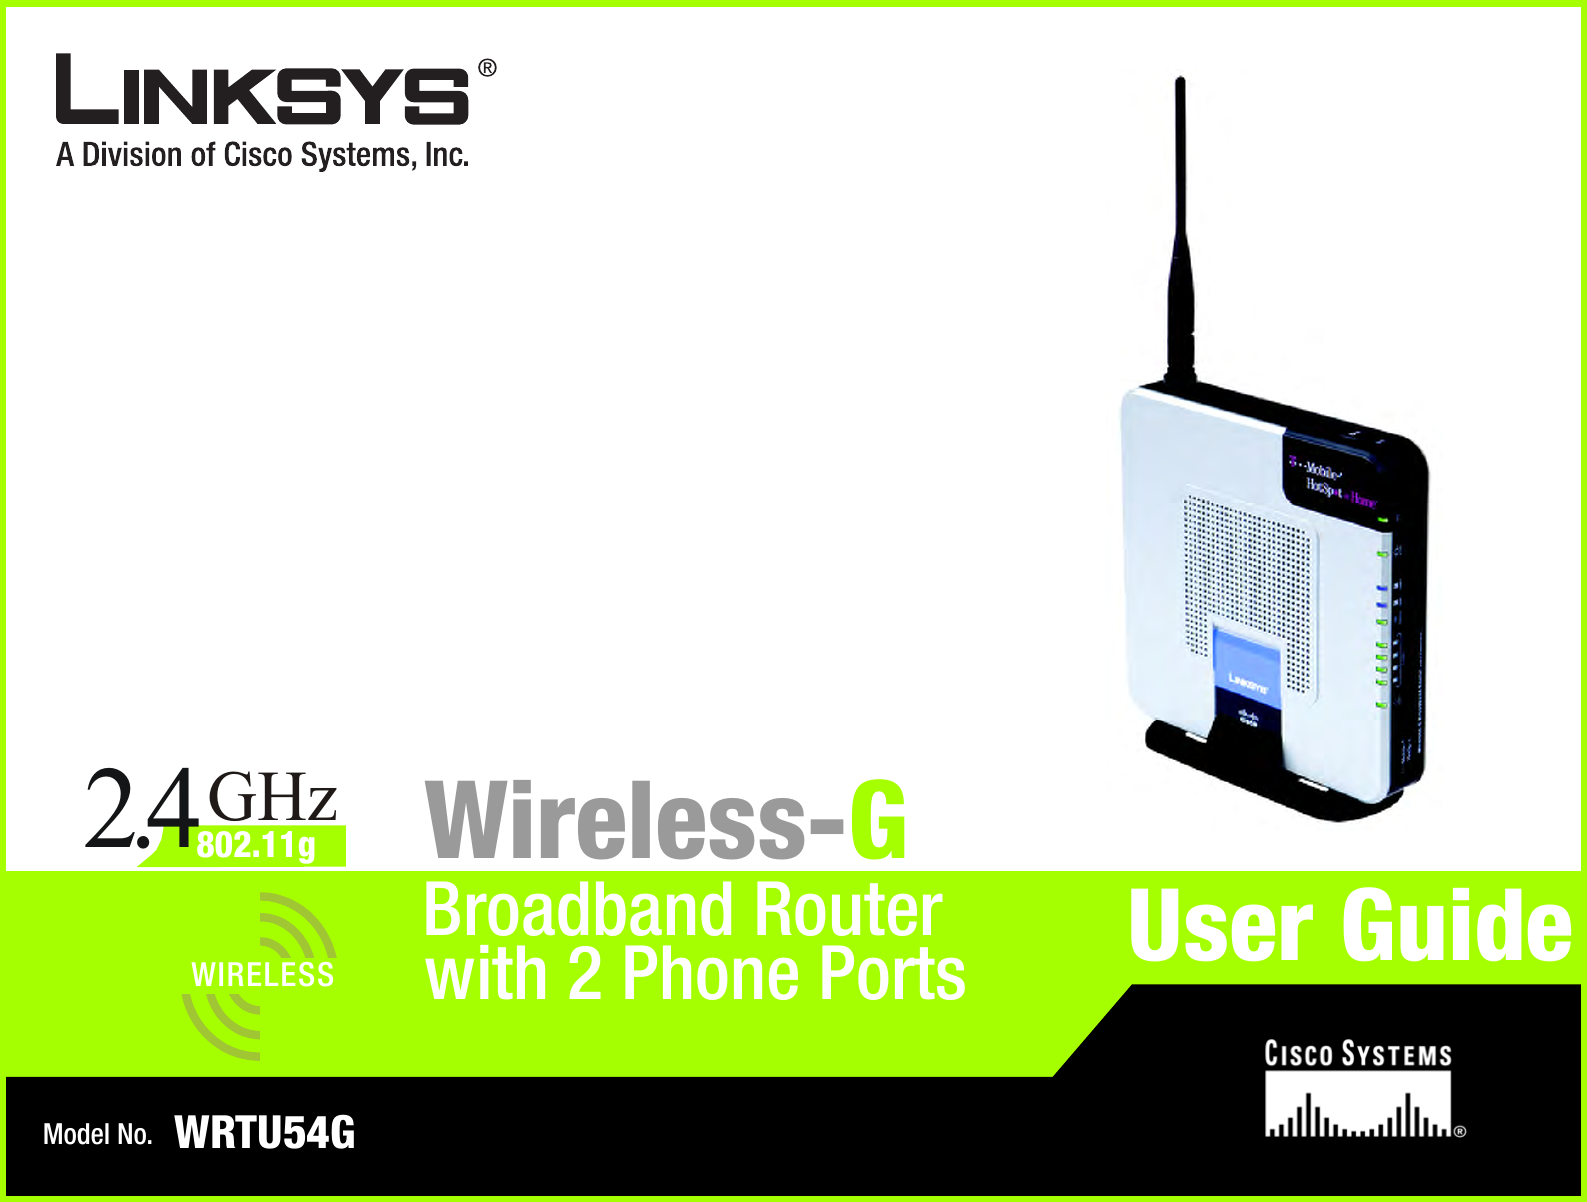 Model No.Broadband RouterWireless-GWRTU54GUser GuideWIRELESSGHz2.4802.11gwith 2 Phone Ports